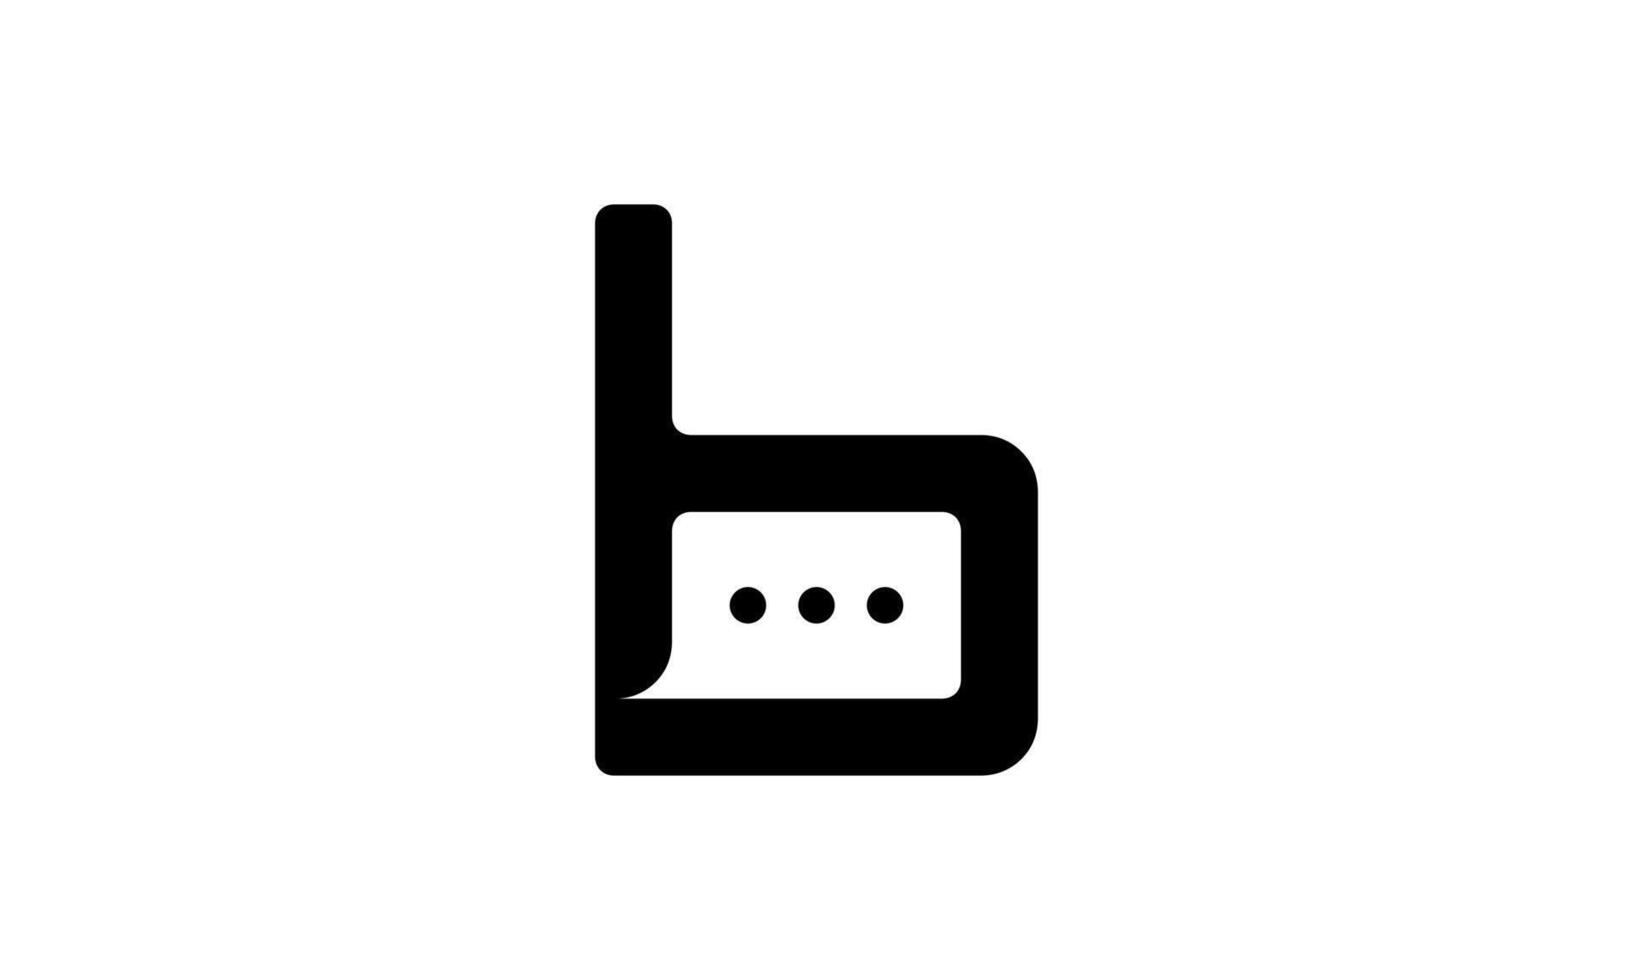 inicial carta b logotipo Projeto. b logotipo Projeto. criativo e moderno b logotipo. pró vetor